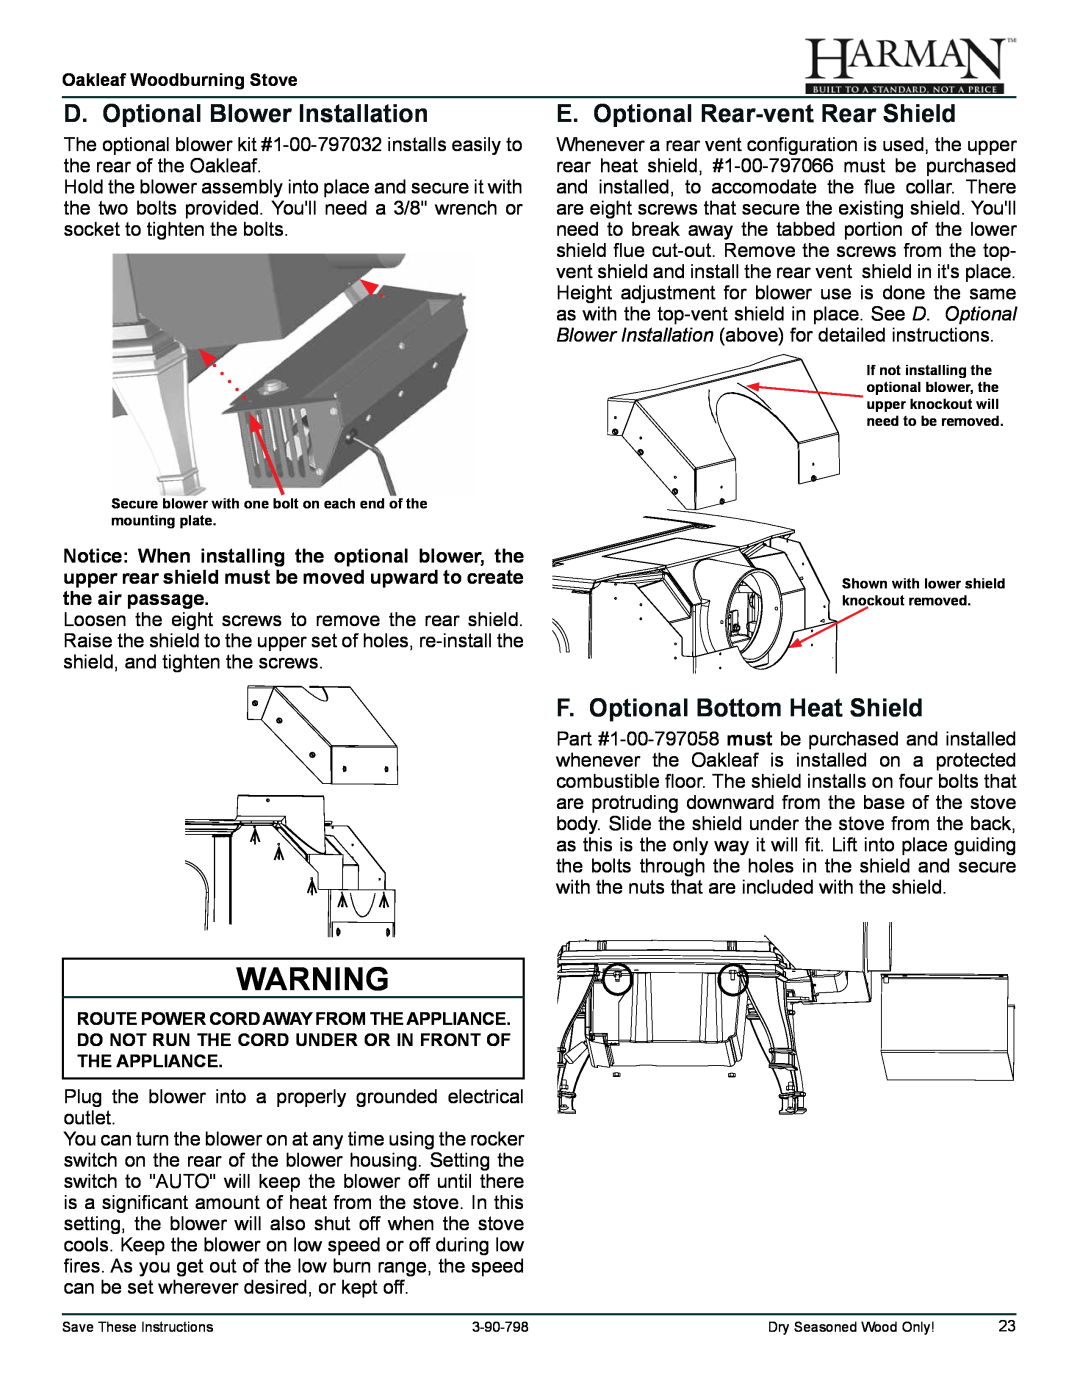 Harman Stove Company 1-90-79700 owner manual D. Optional Blower Installation, E. Optional Rear-ventRear Shield 